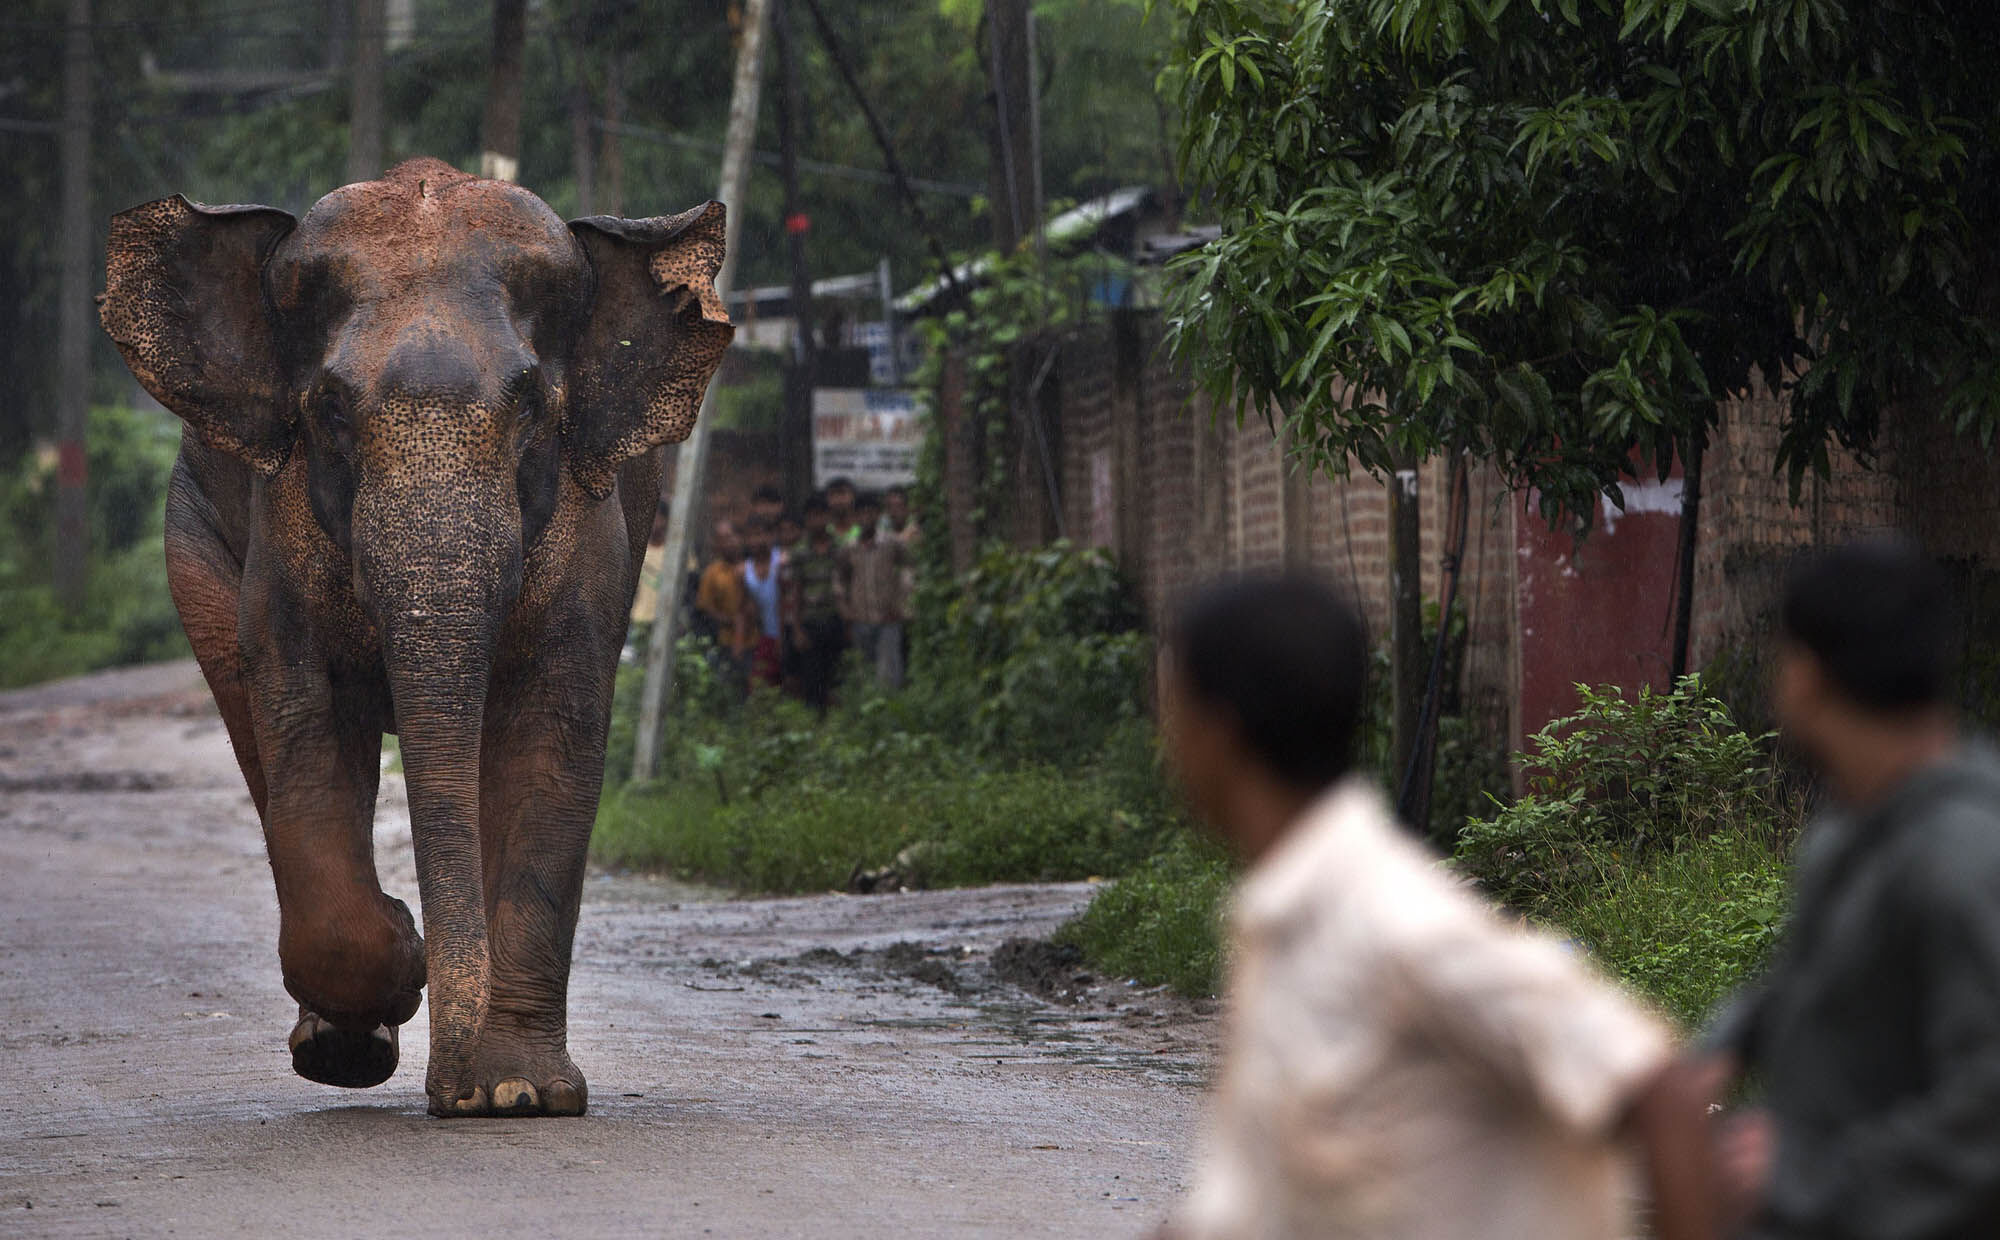 Assam faces rising human-elephant conflict despite Govt claims of mitigation measures